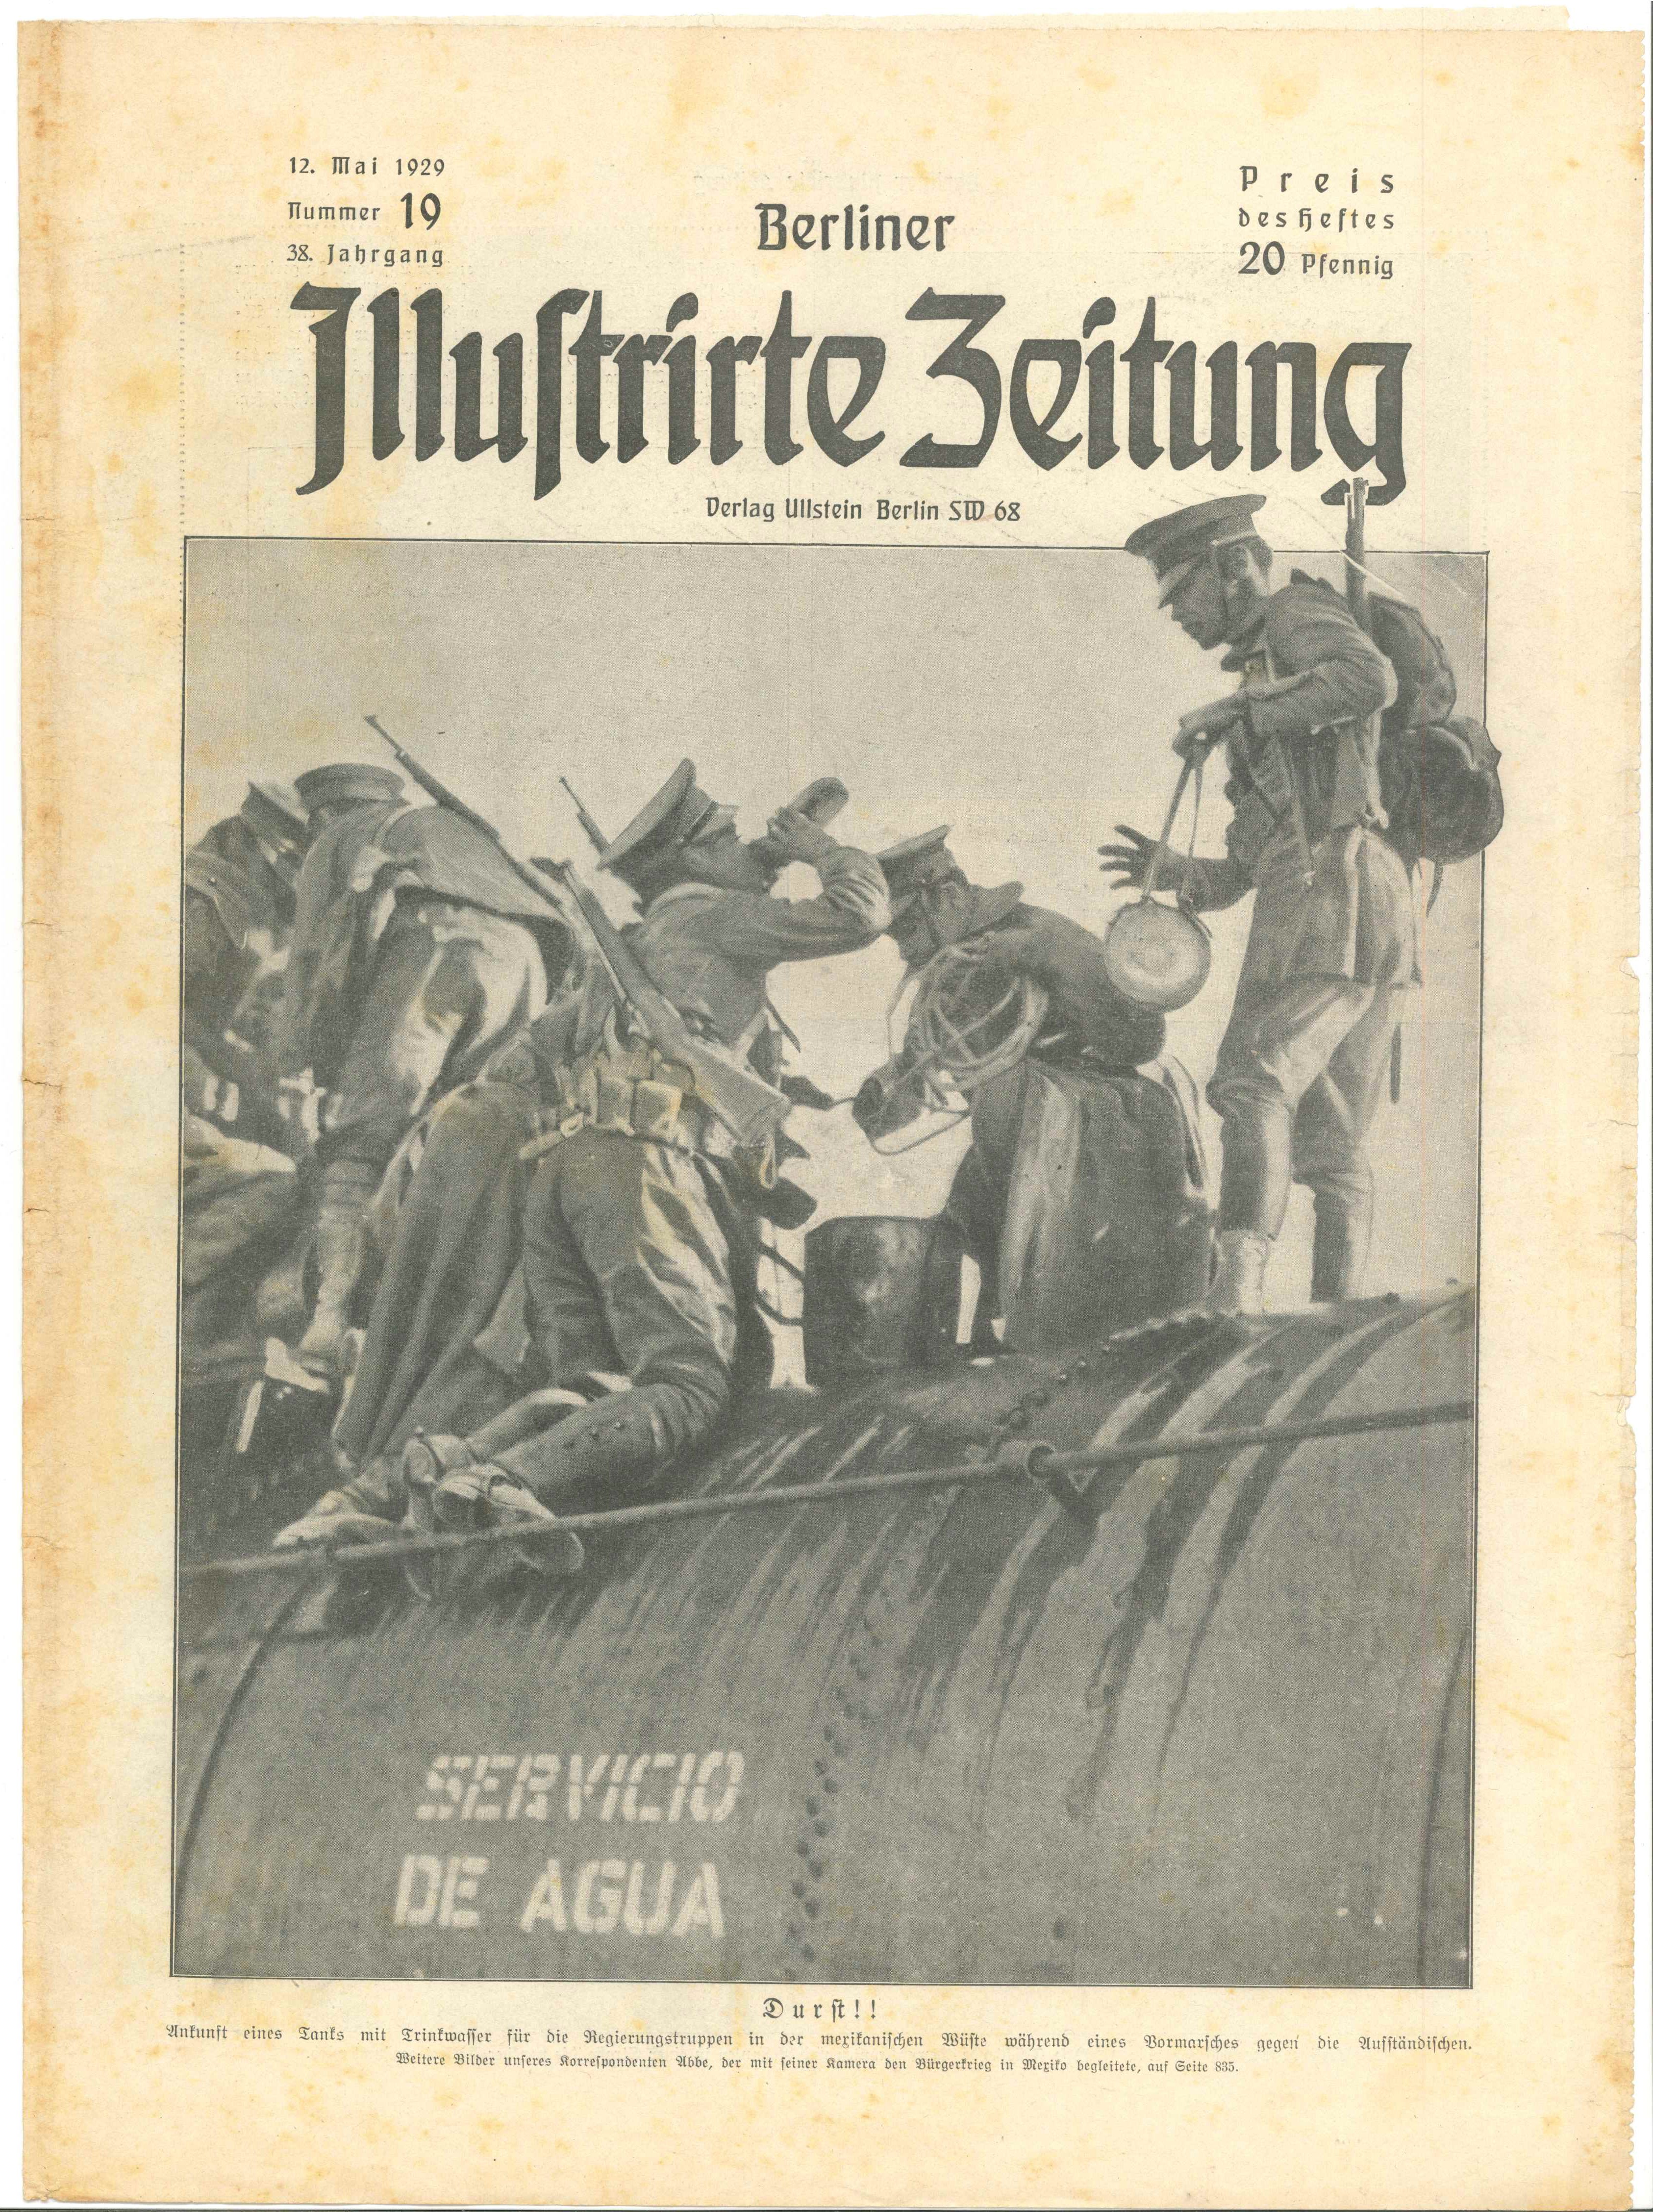 BIZ, Nr. 19, 1929, Titelseite (Kurt Tucholsky Literaturmuseum CC BY-NC-SA)